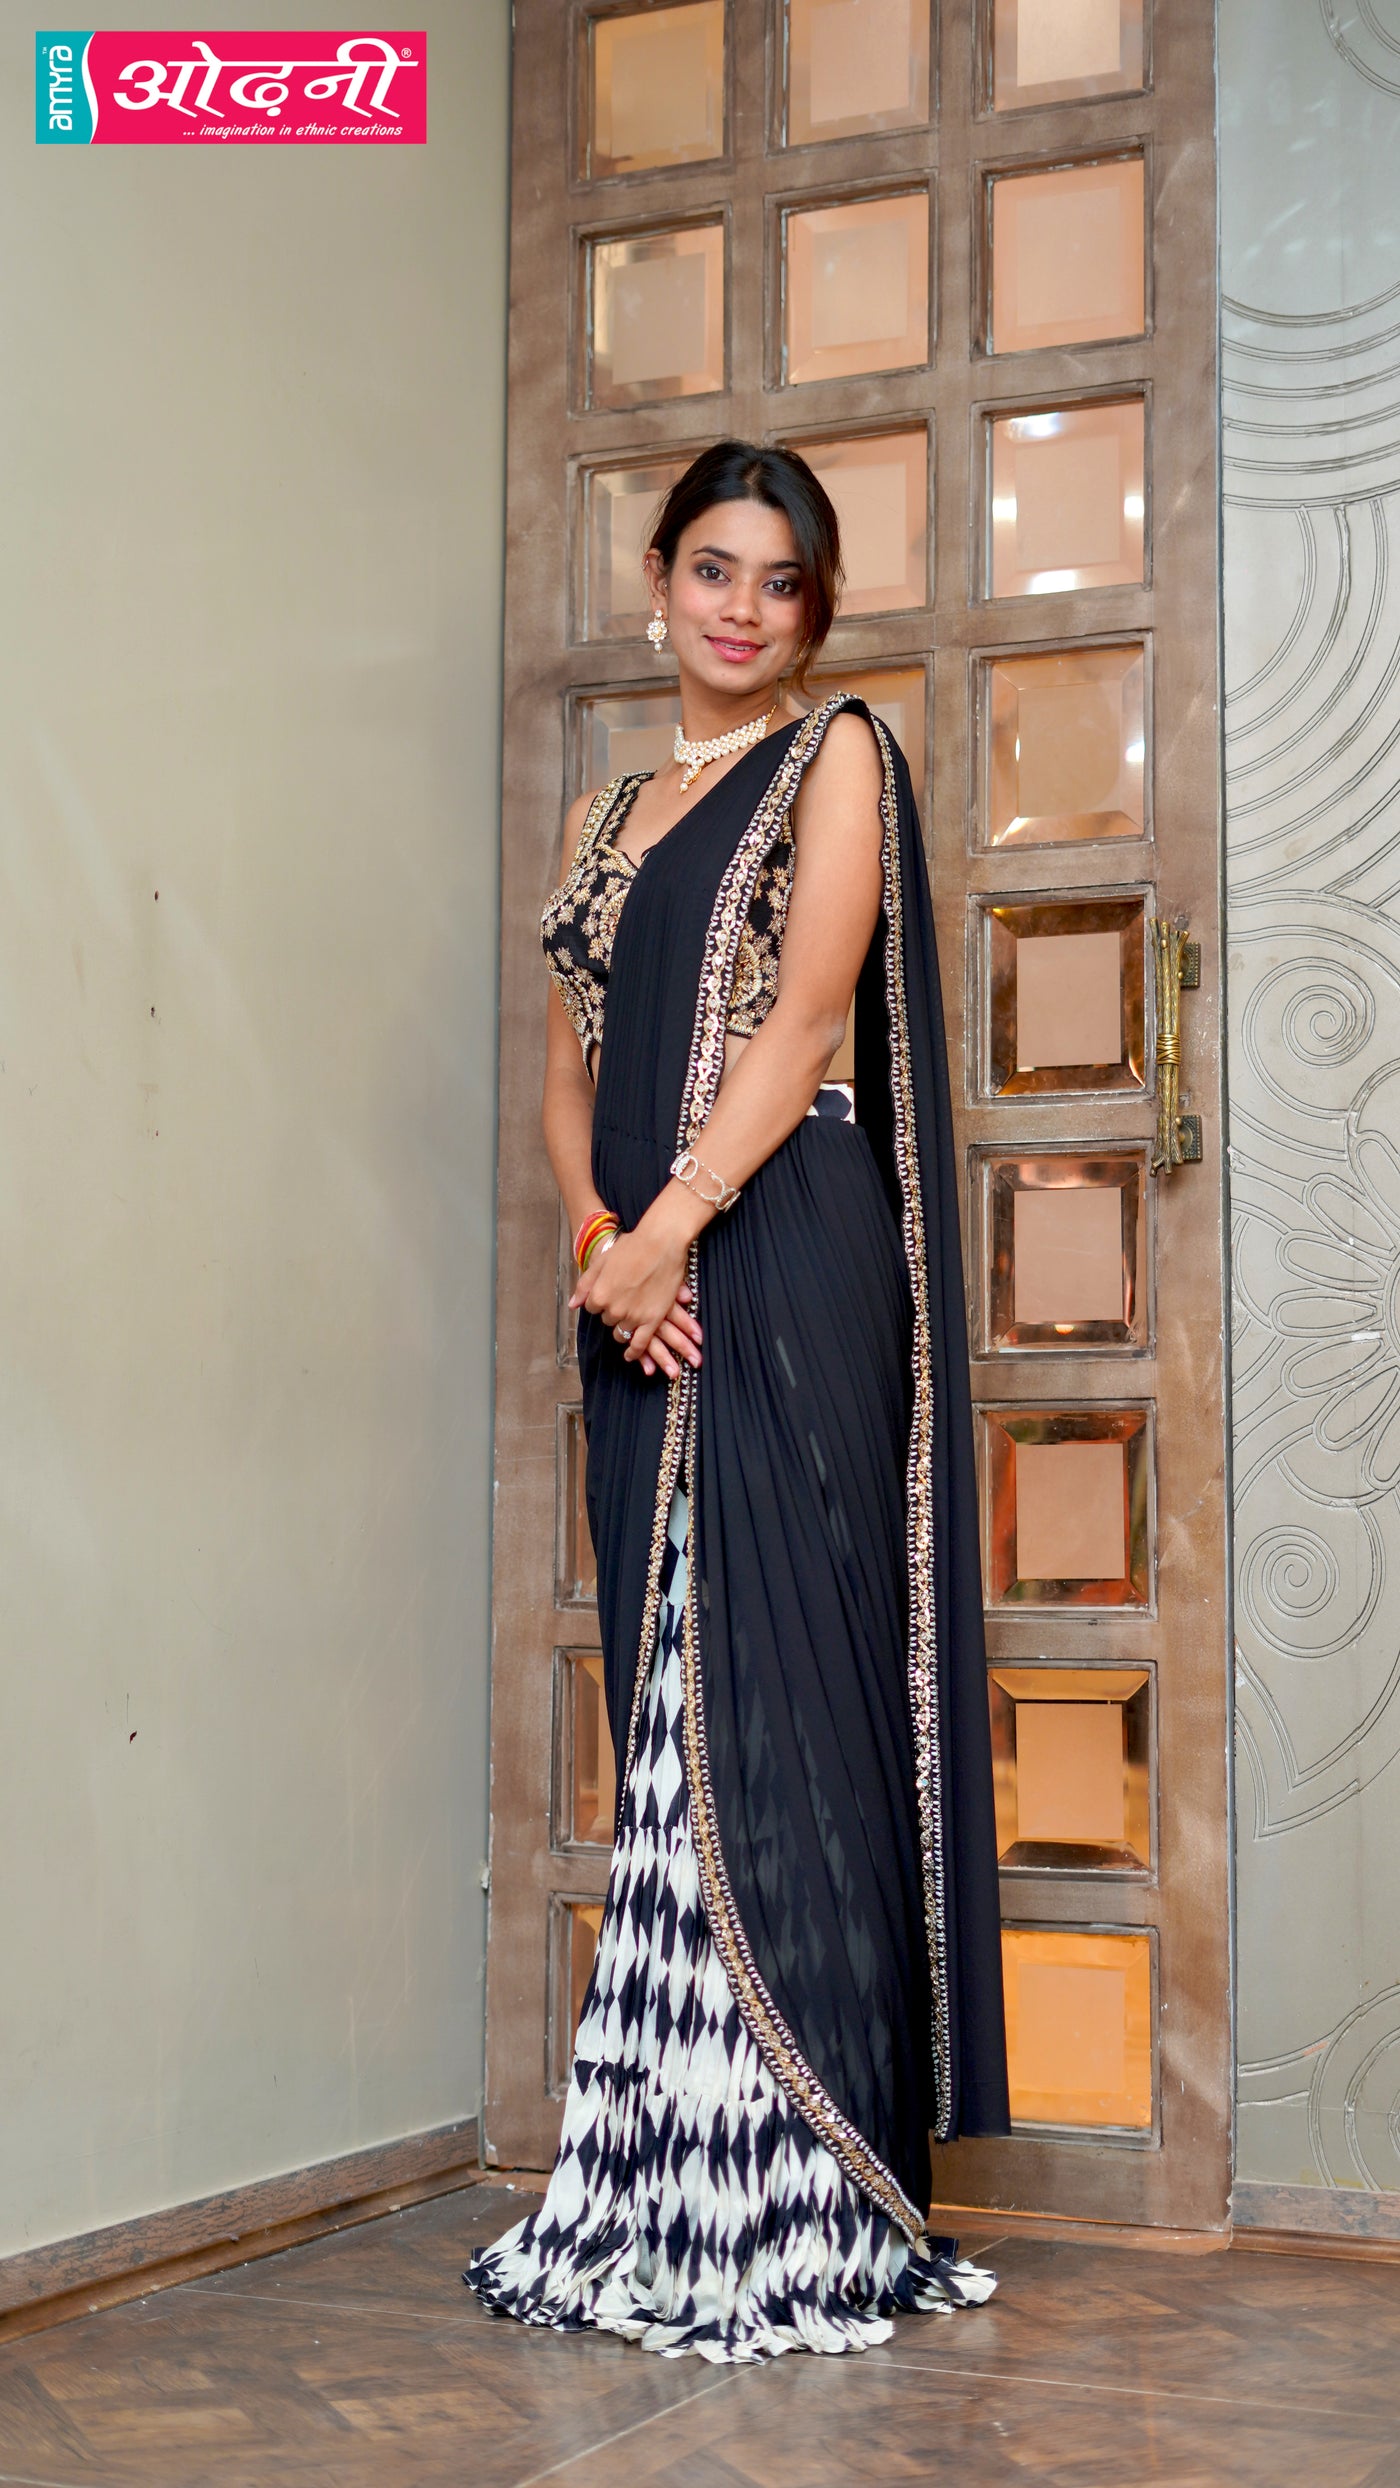 Elegant white & black color embroidered drape saree cum sharara